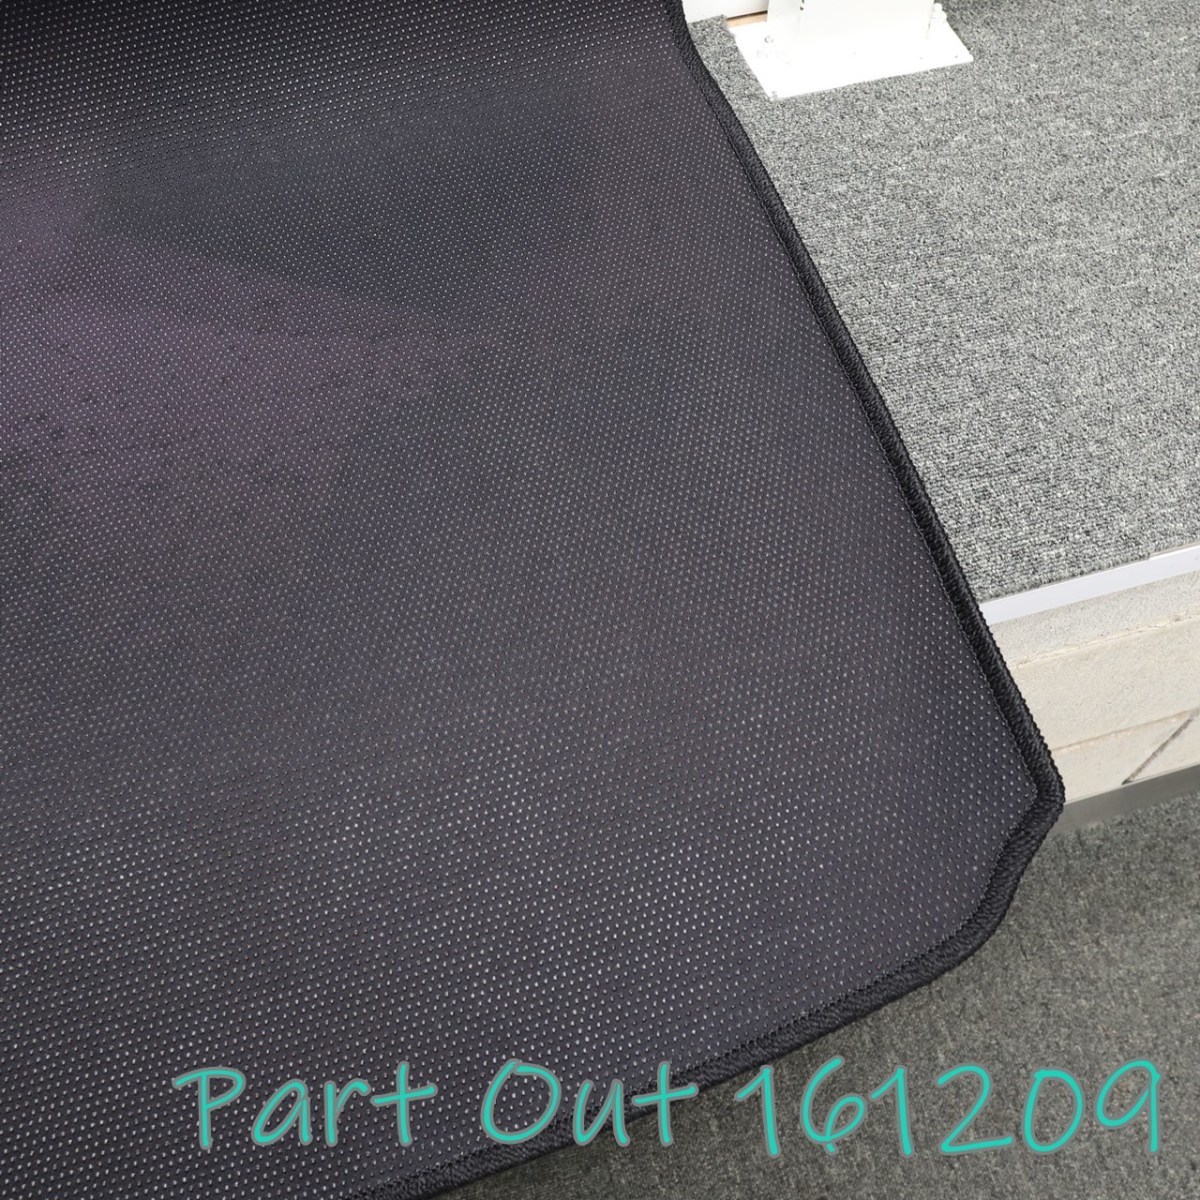 [M-20] Benz W177 A200d original option luggage room mat floor mat AMG line used 